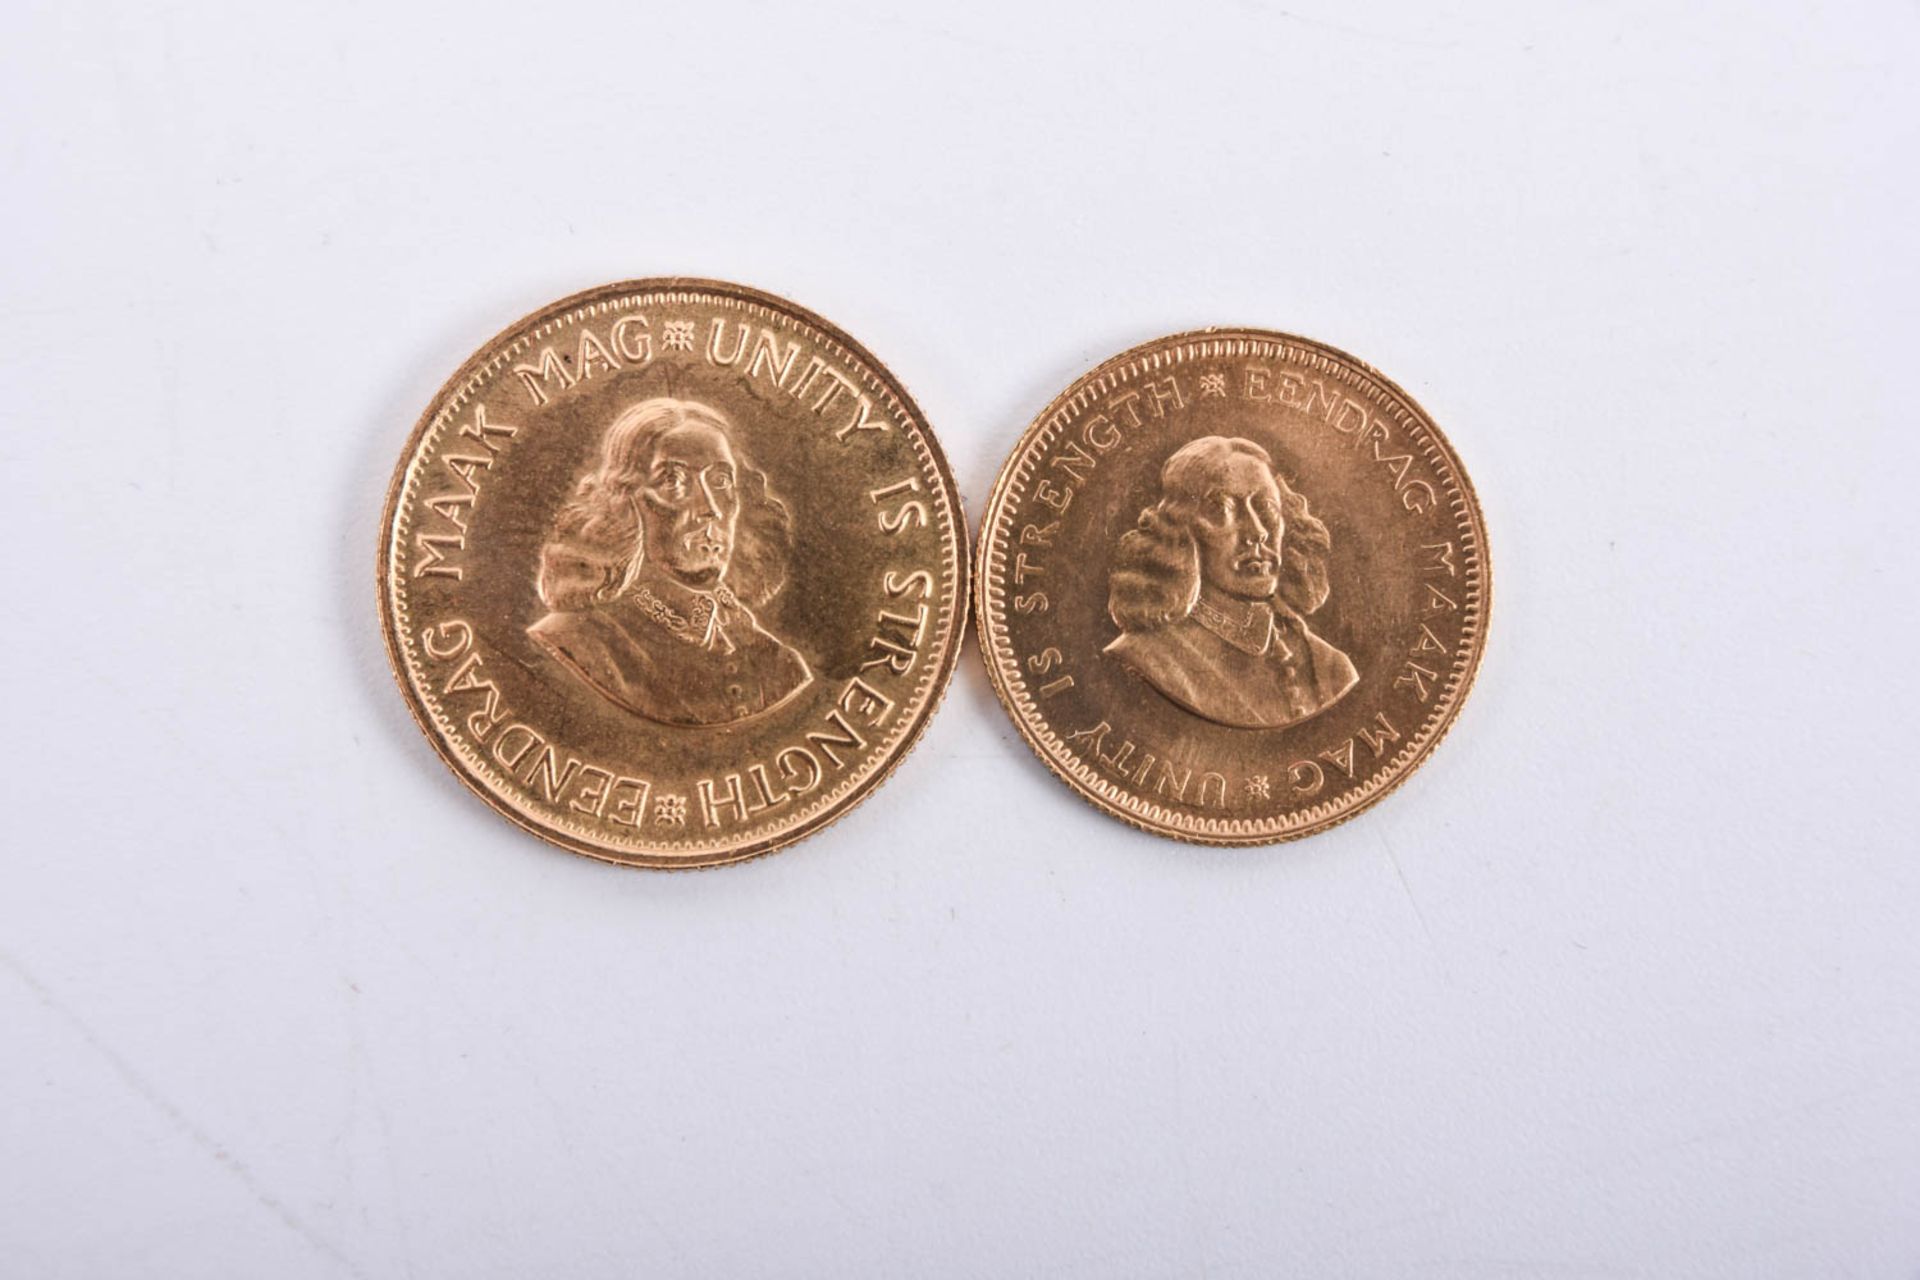 Südafrika 2 Rand 1976 Goldmünze u. Südafrika 1 Rand 1969 Goldmünze - Image 2 of 3